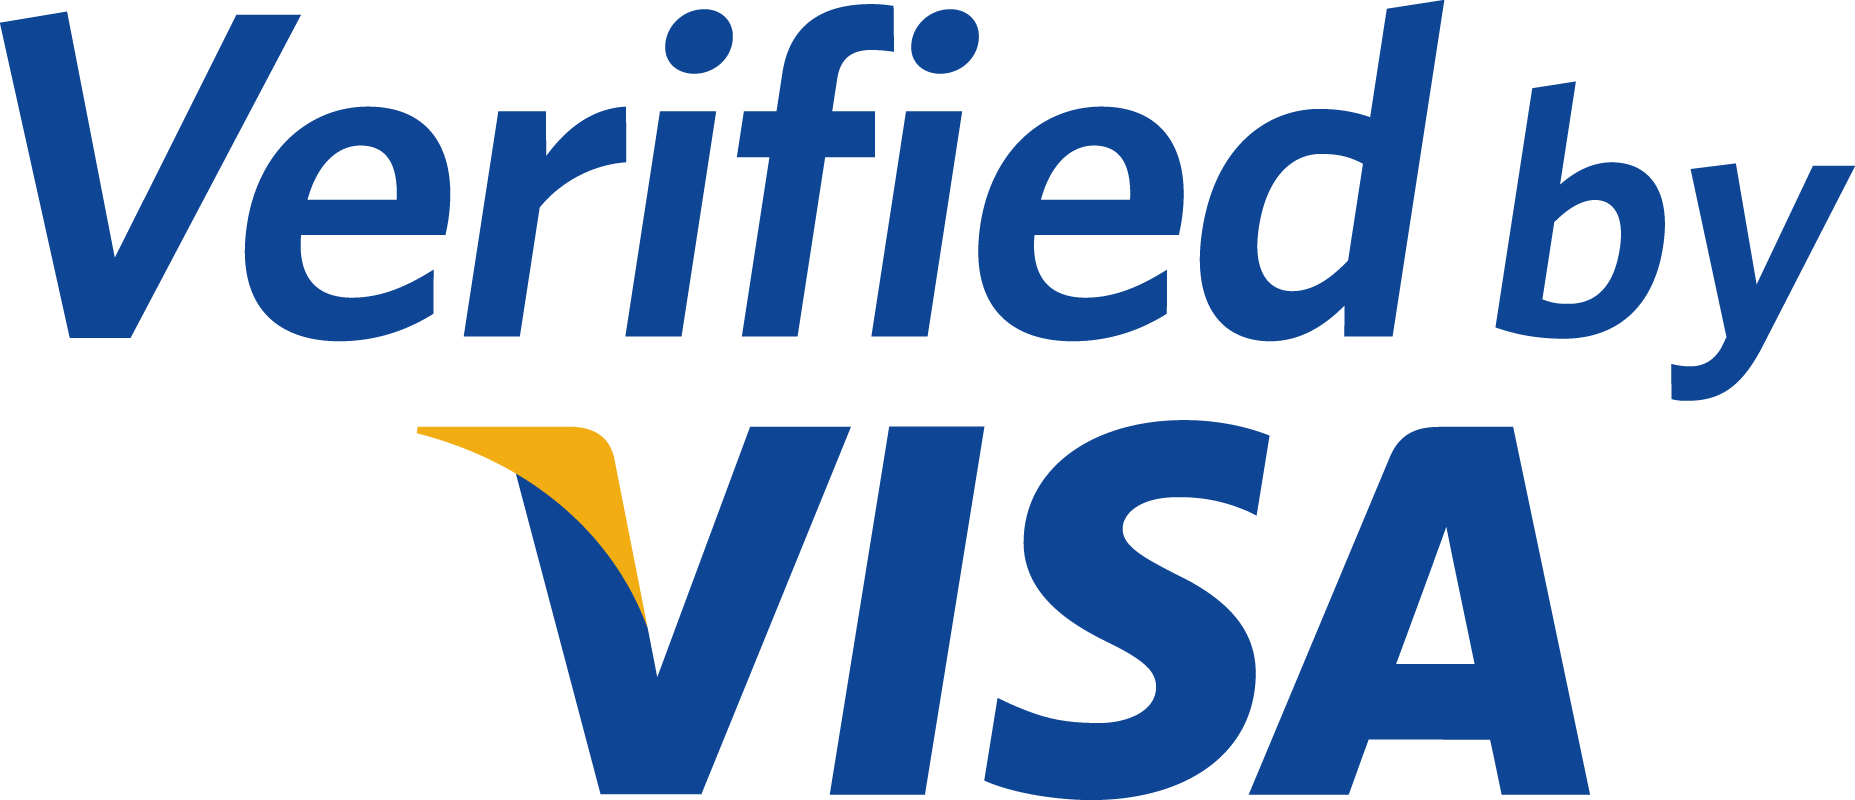 Verified by Visa Net